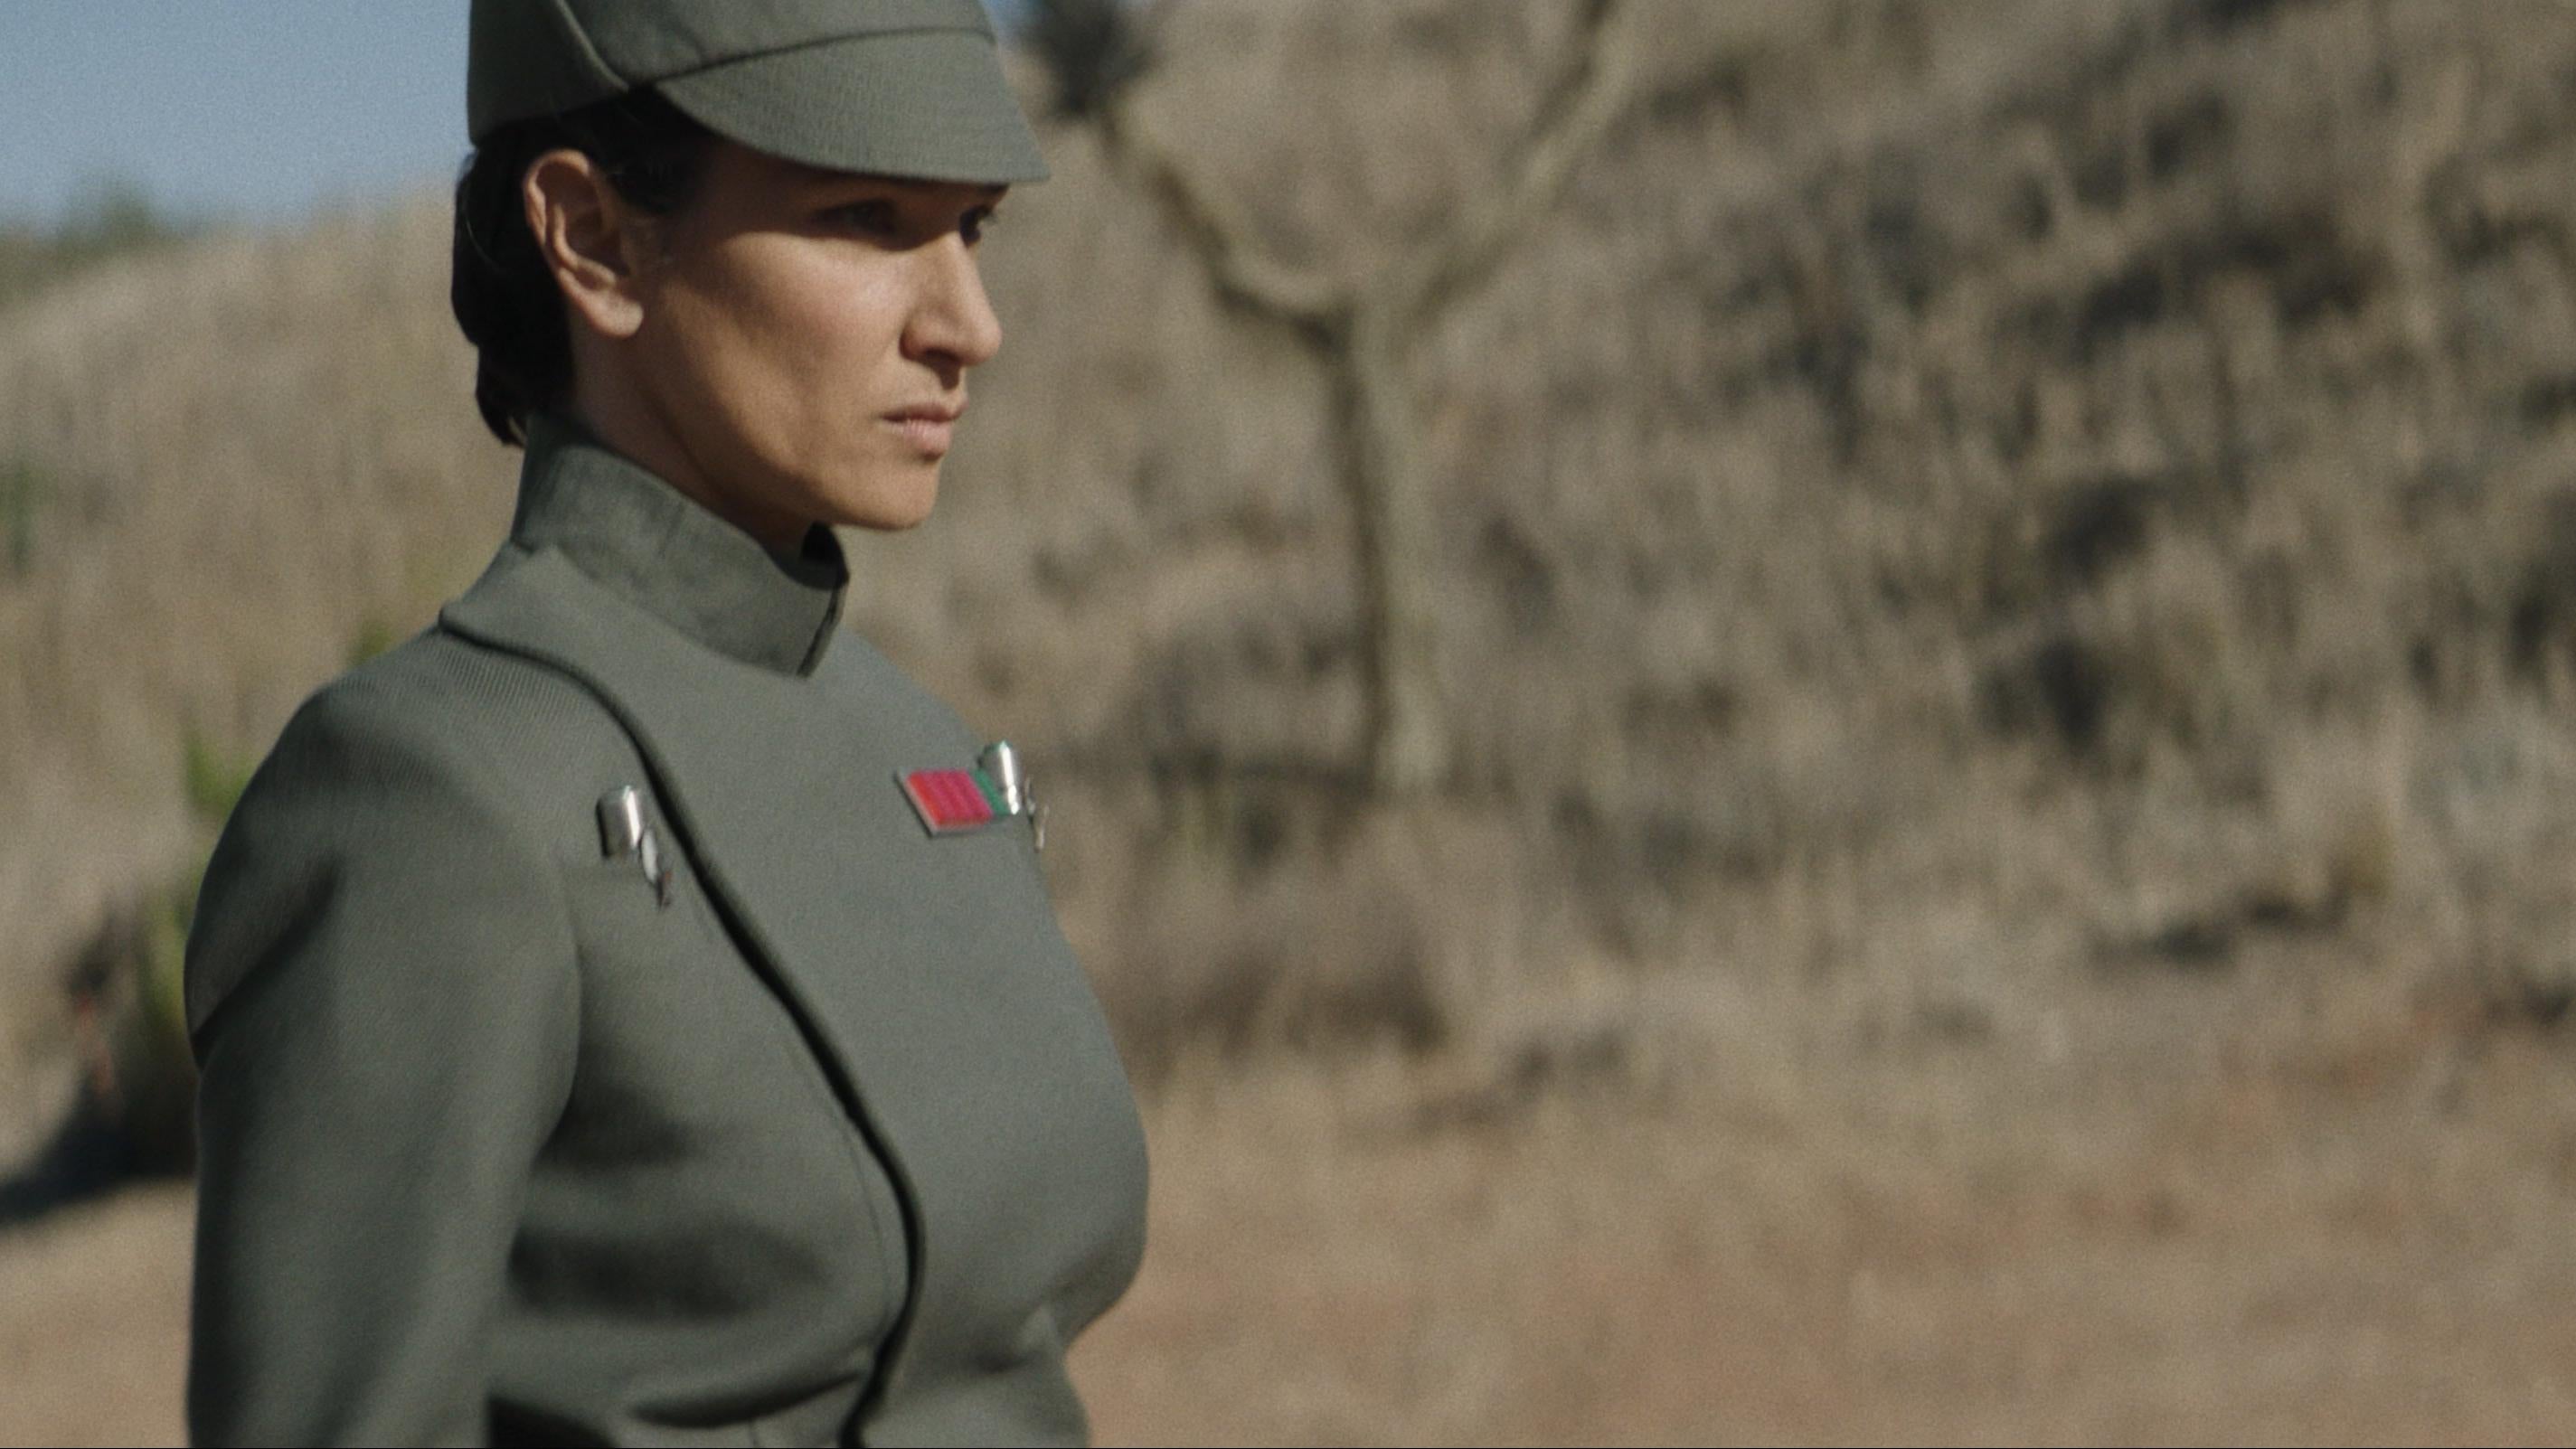 Indira Varma as Imperial officer/Jedi helper Tala (Image: Lucasfilm)